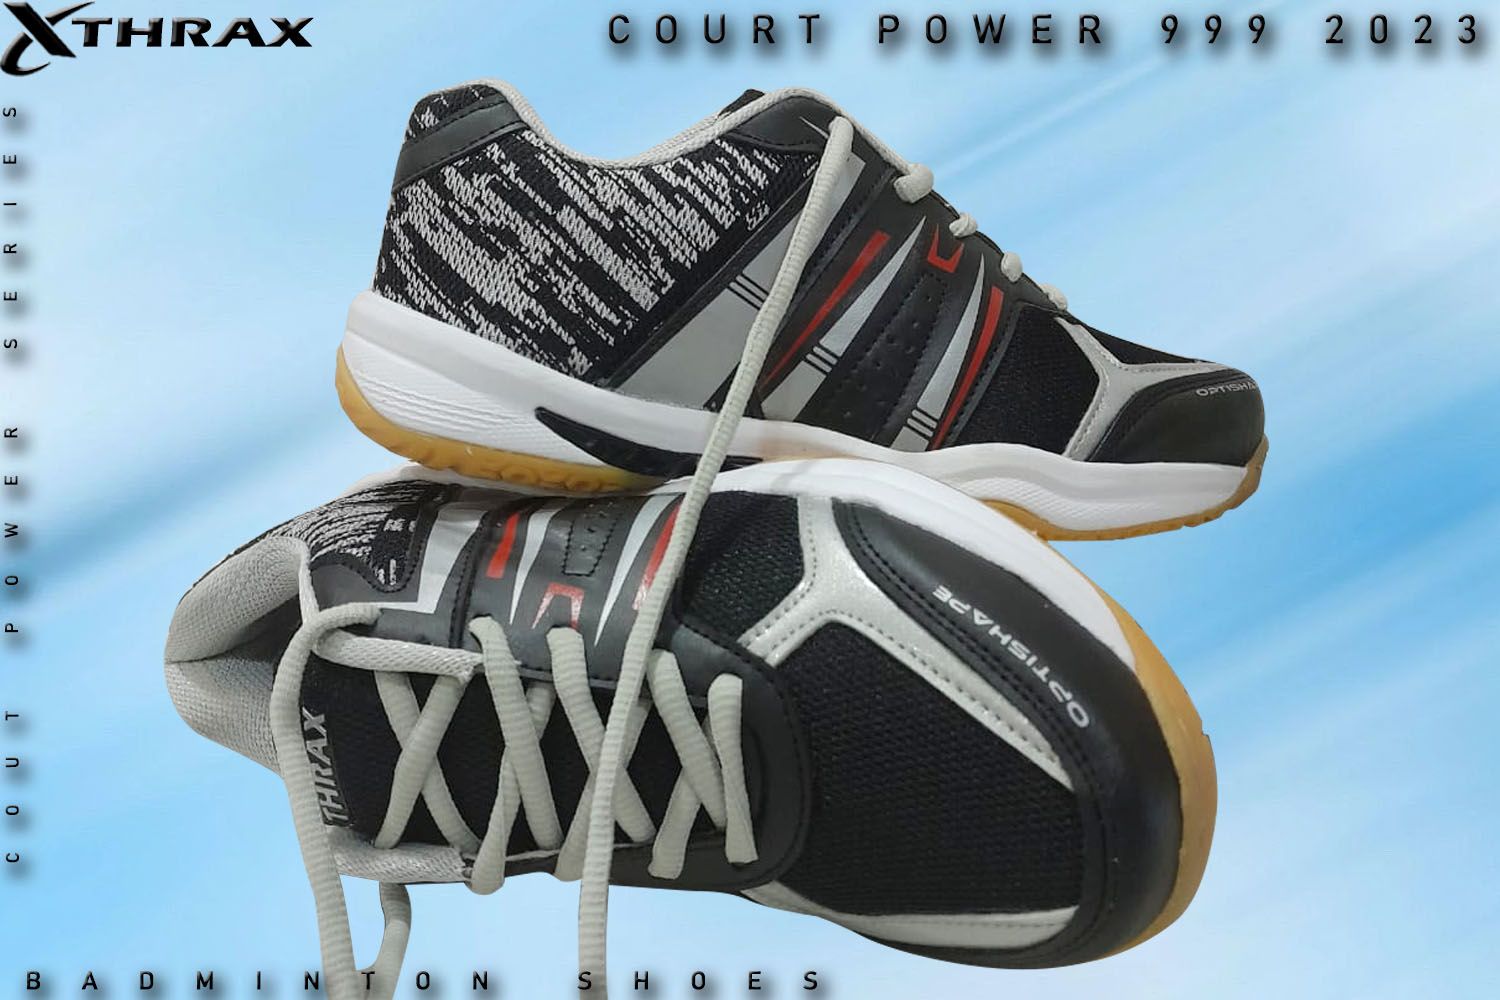 Thrax Court Power 999 2023 Badminton Shoes Gray Black